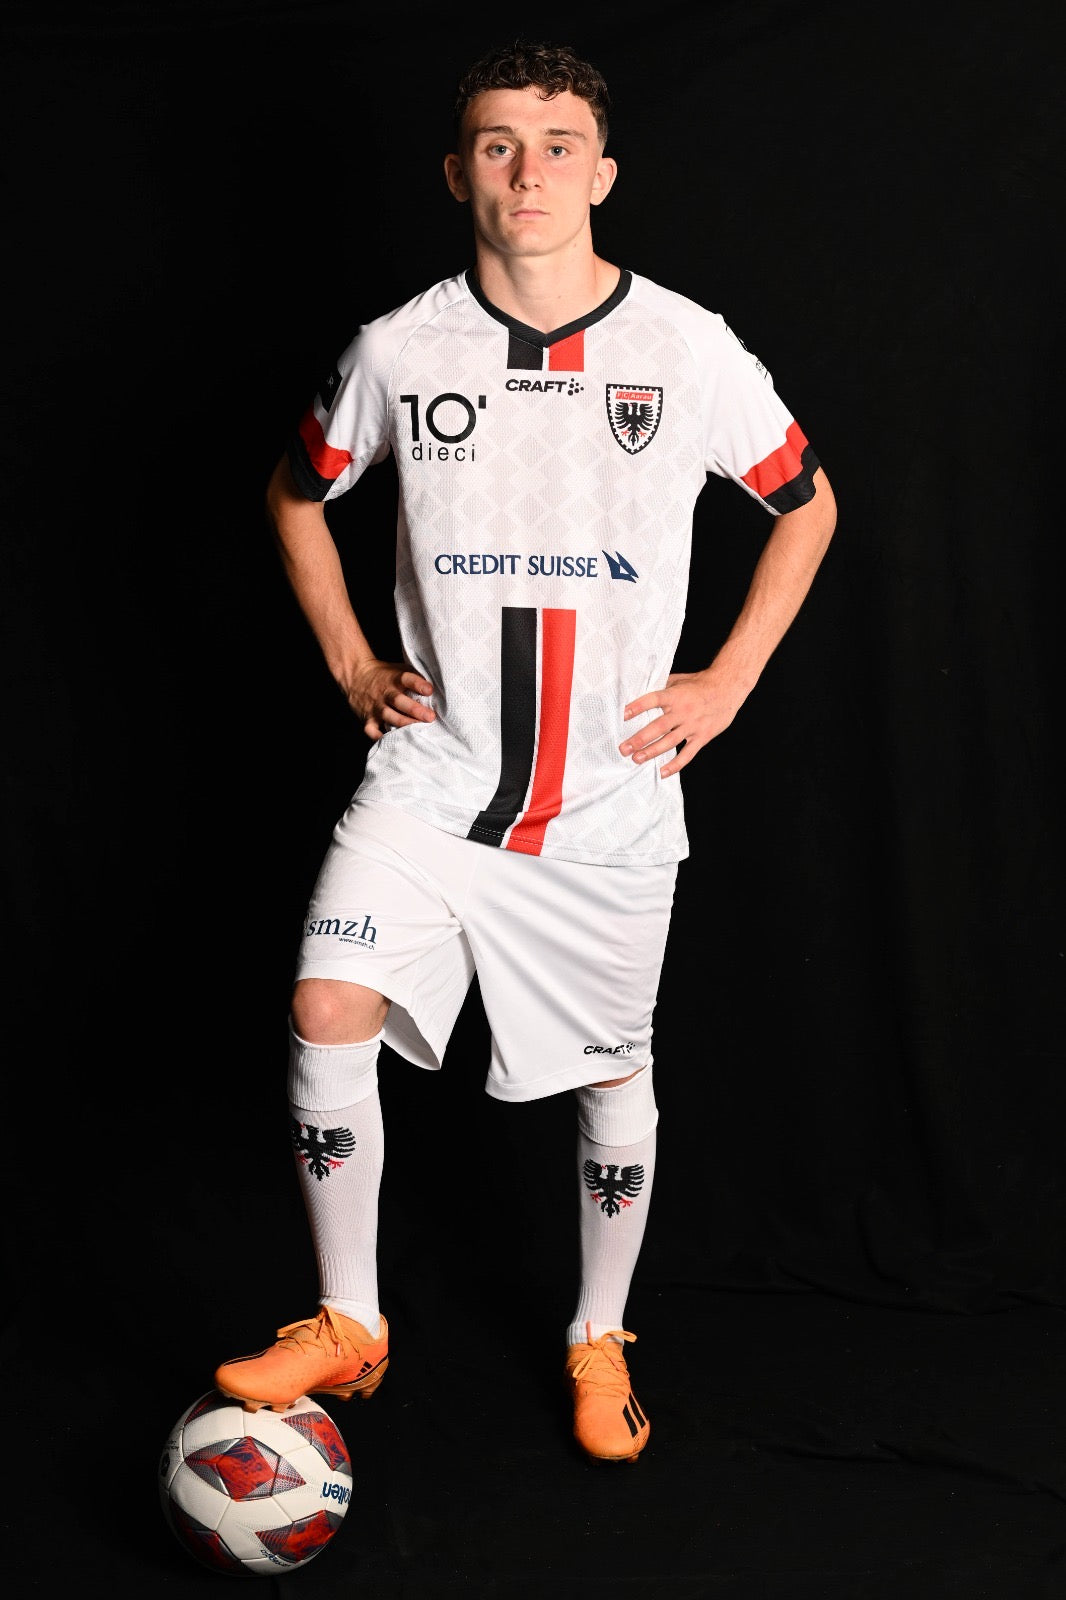 Samuel Krasniqi im FC Aarau Dress bei einem Fotoshooting